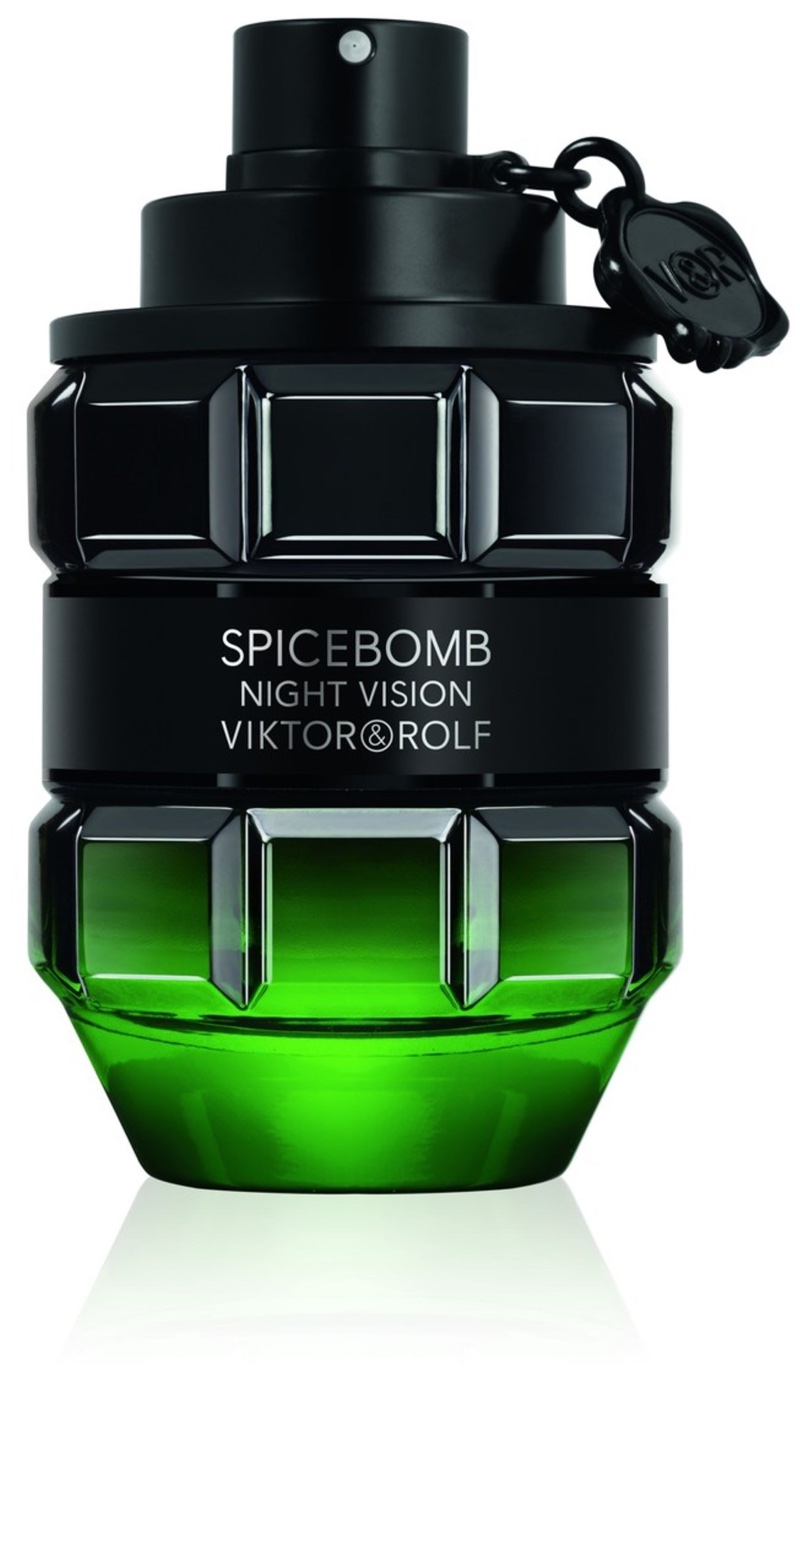 Viktor&Rolf snaps up former The X Factor contestant Jacob Whitesides for new fragrance launch 